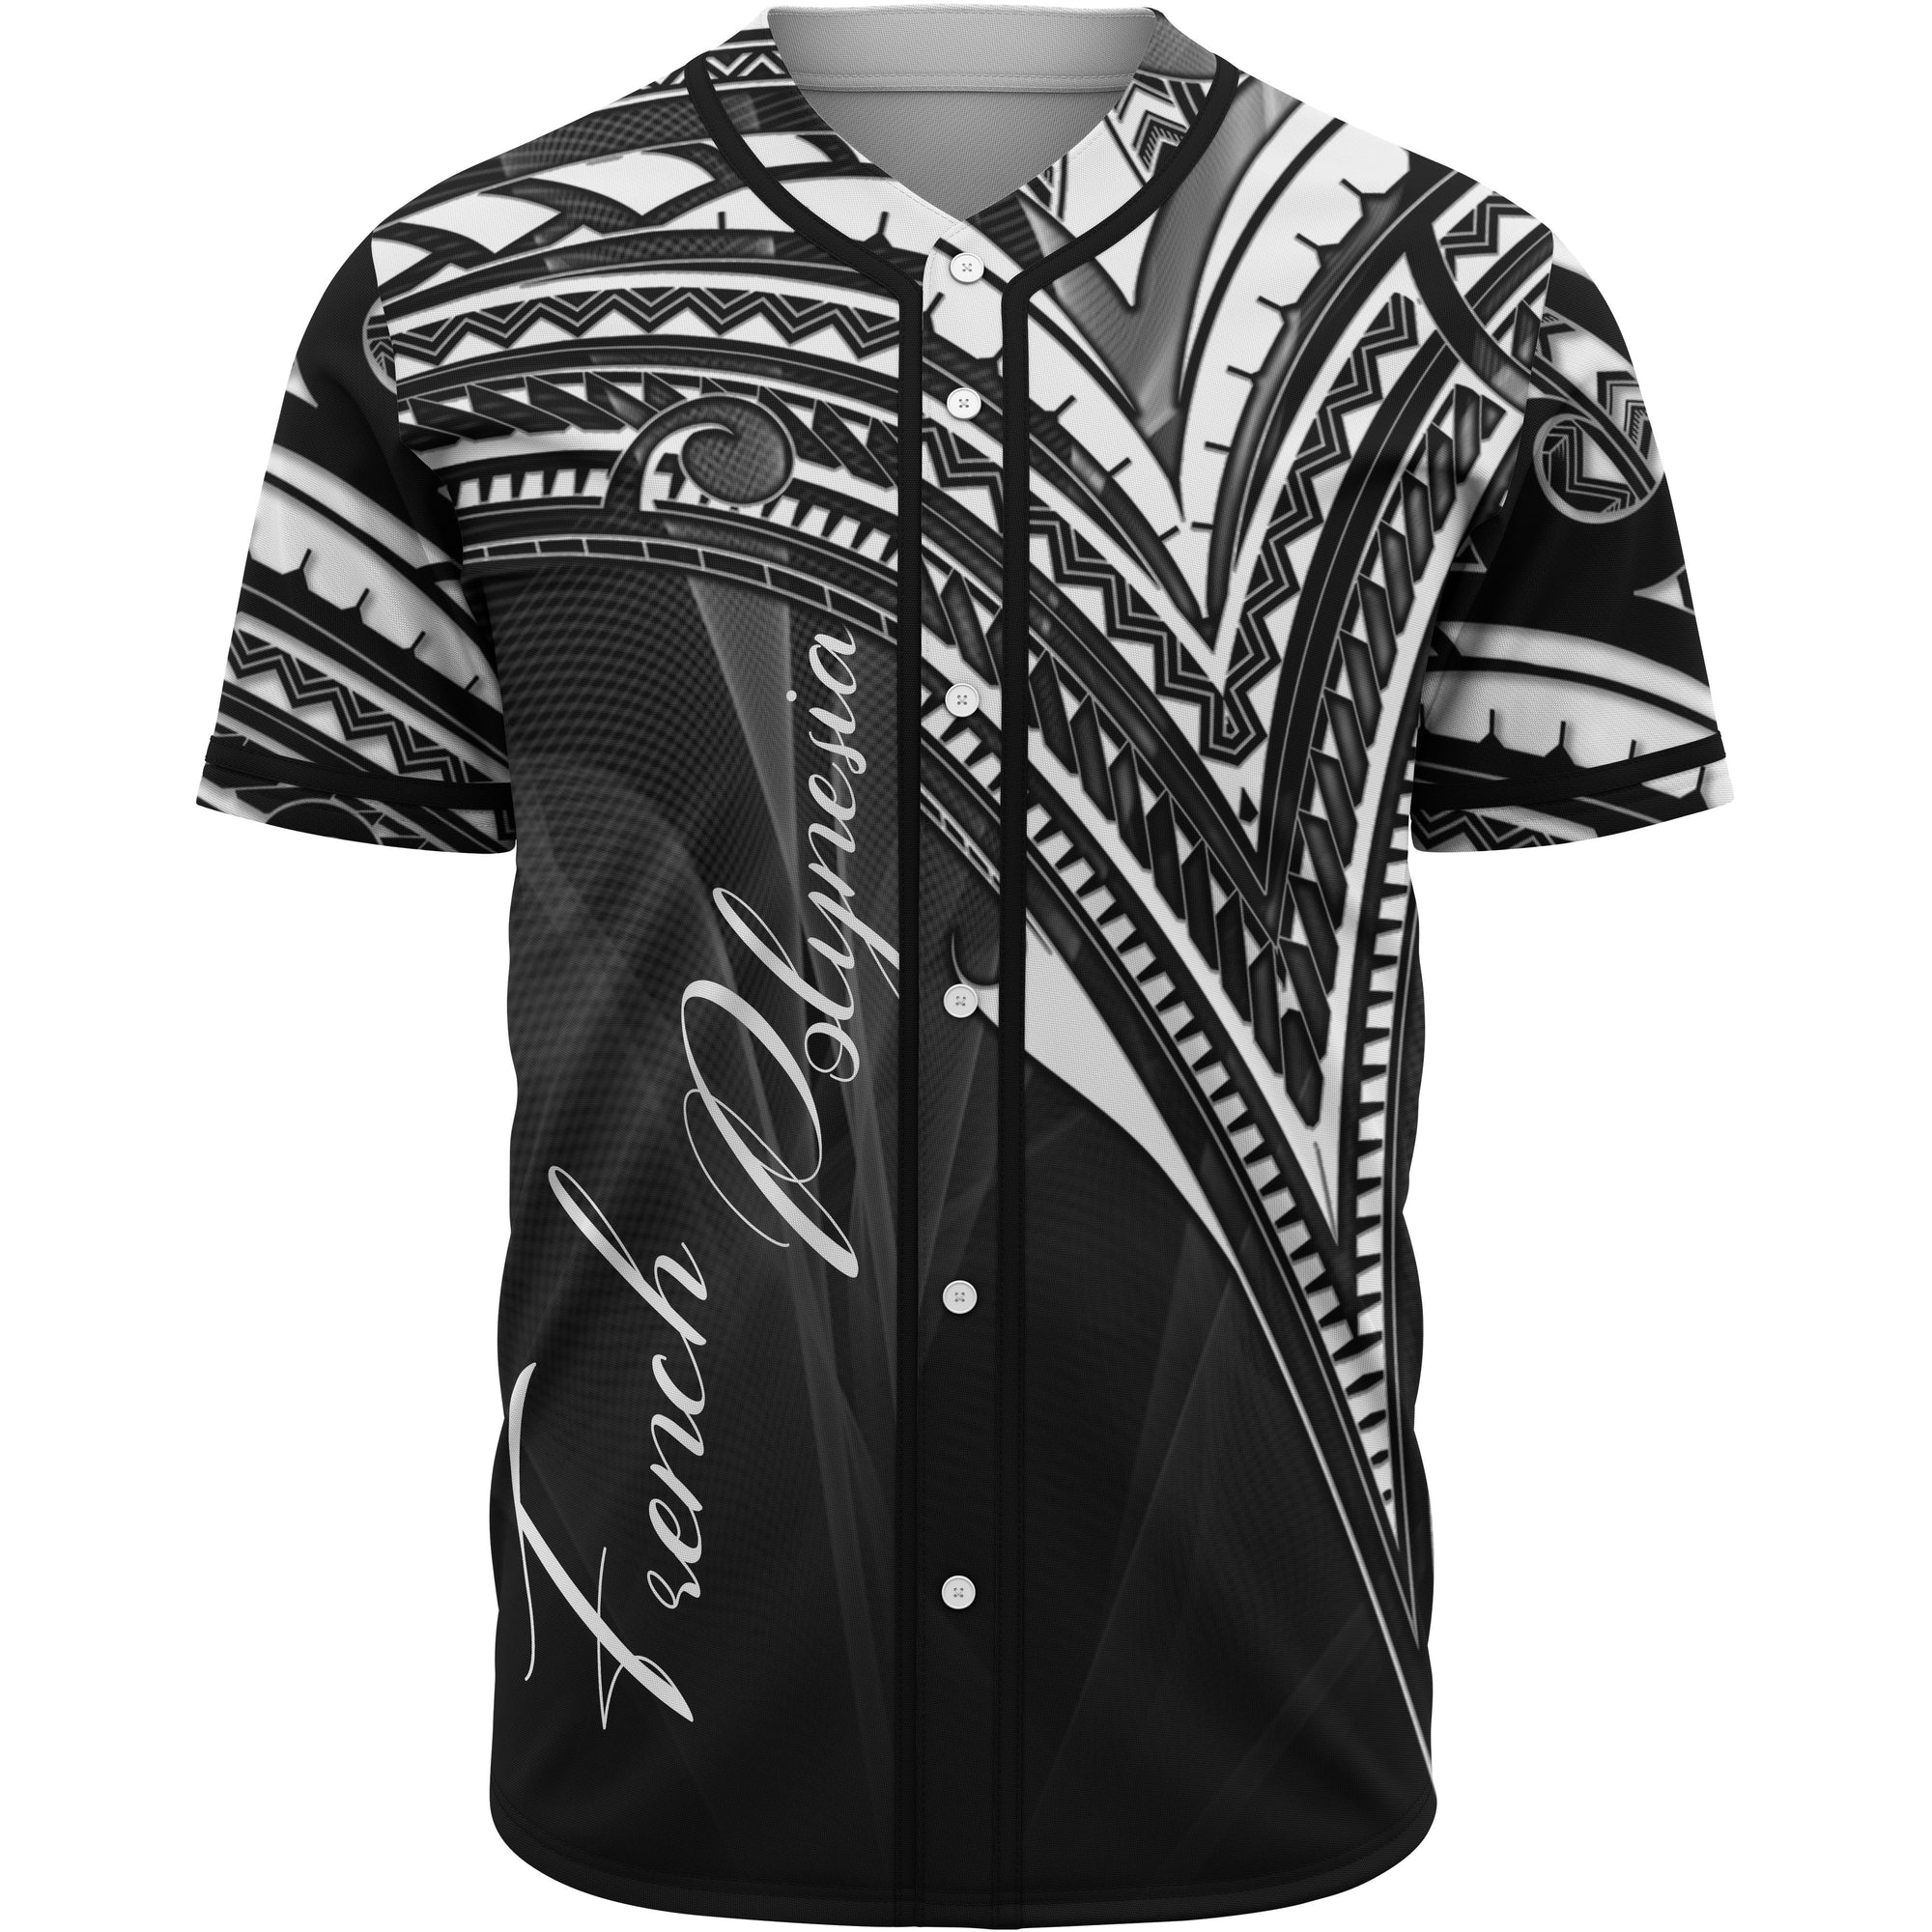 French Polynesia Baseball Shirt - White Color Cross Style Unisex Black - Polynesian Pride